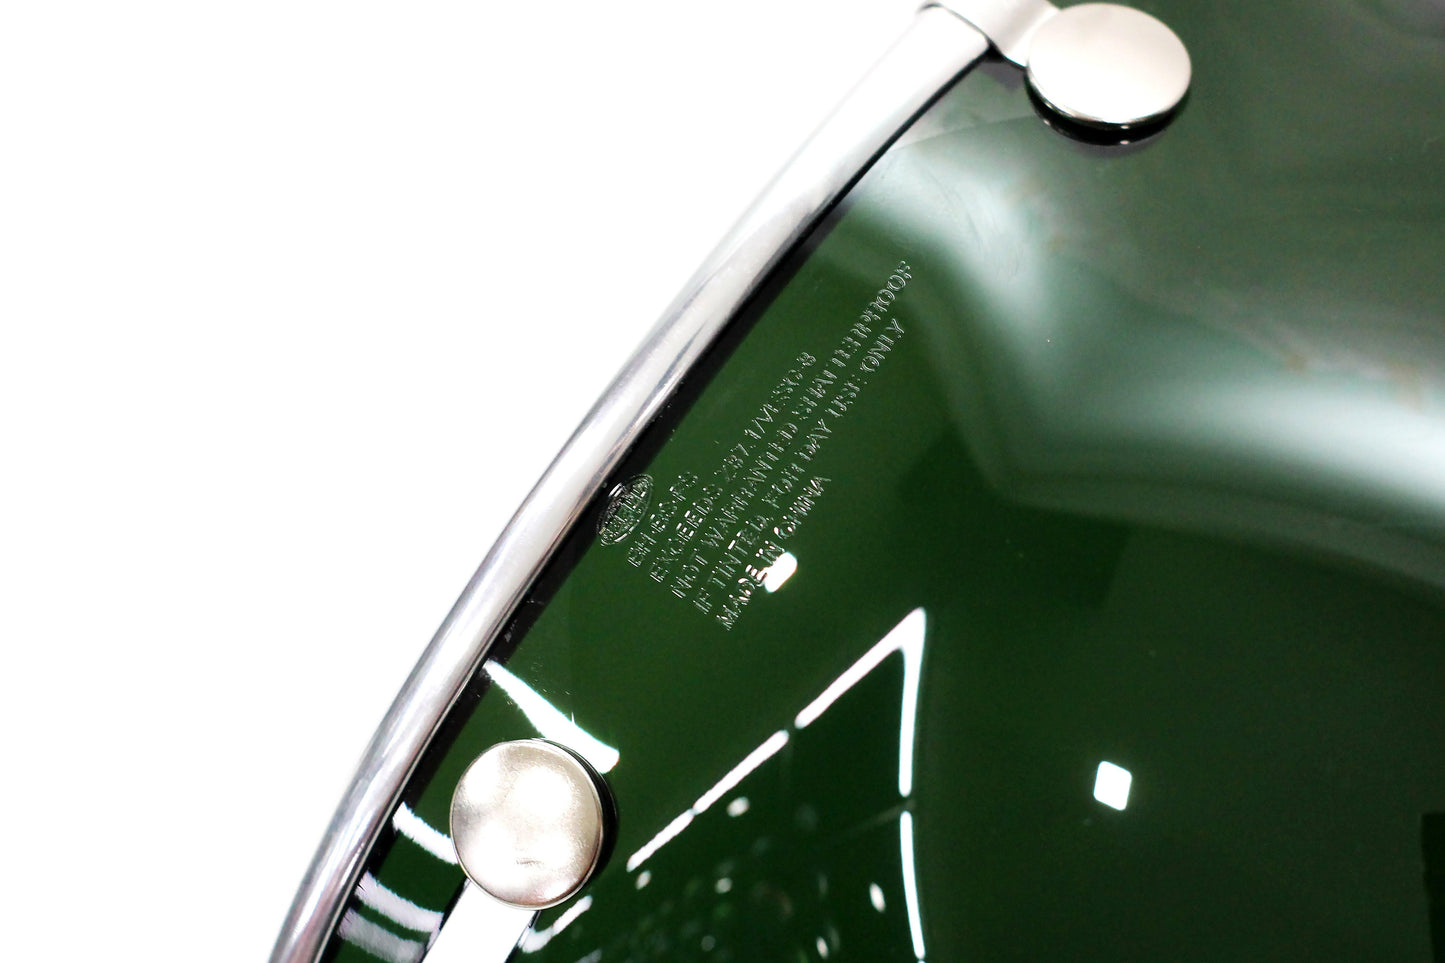 Bell PS-3 Snap Visor (Bubble Deluxe Shield WayFarer Green) - Durian Bikers